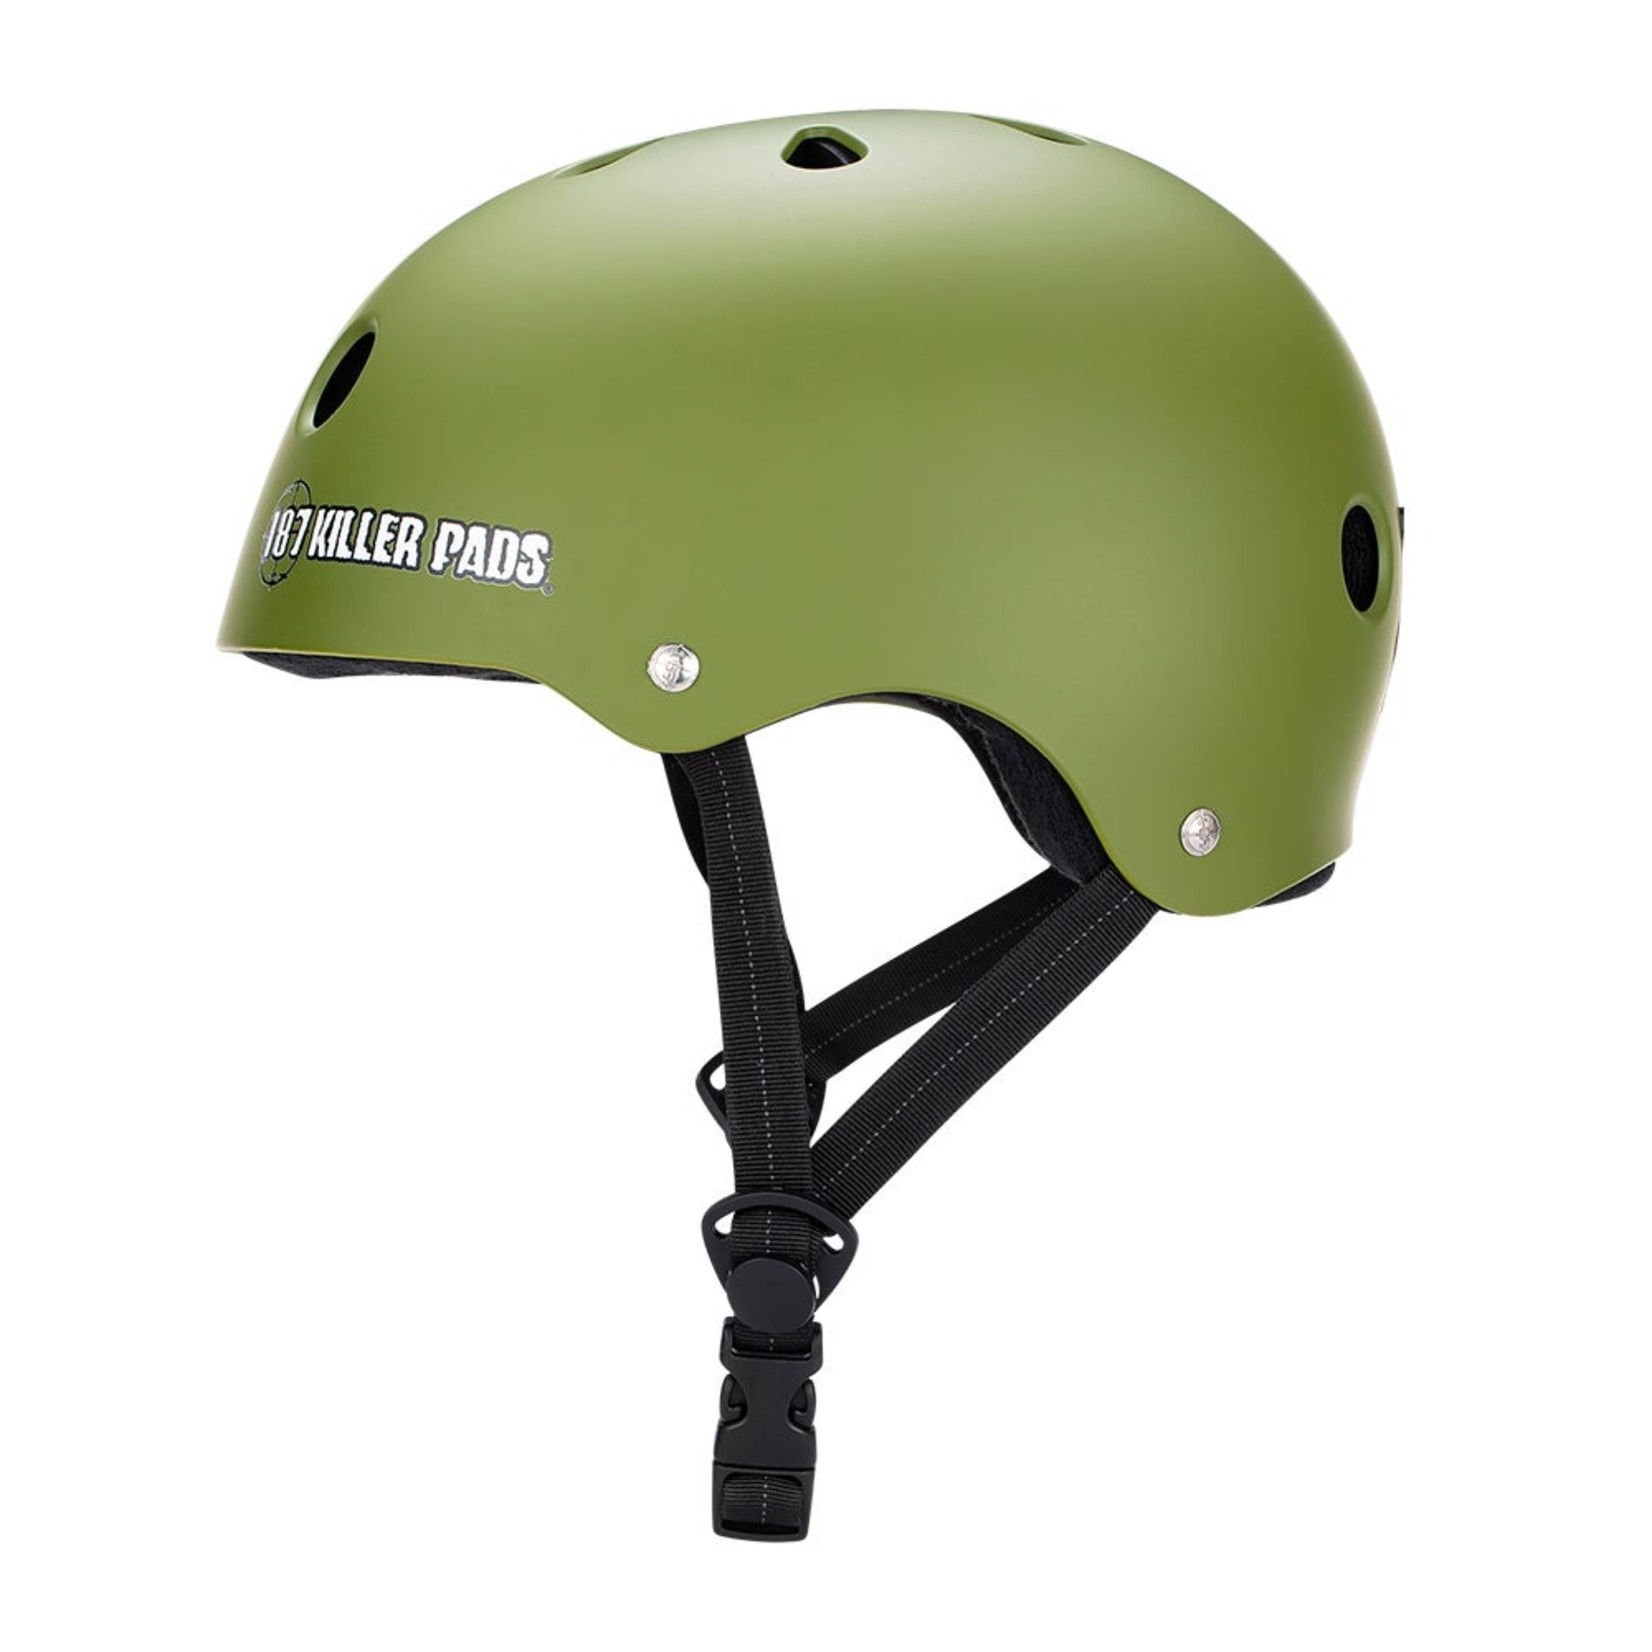 187 187 Pro Skate Sweatsaver Helmet - SM - Army Green Matte